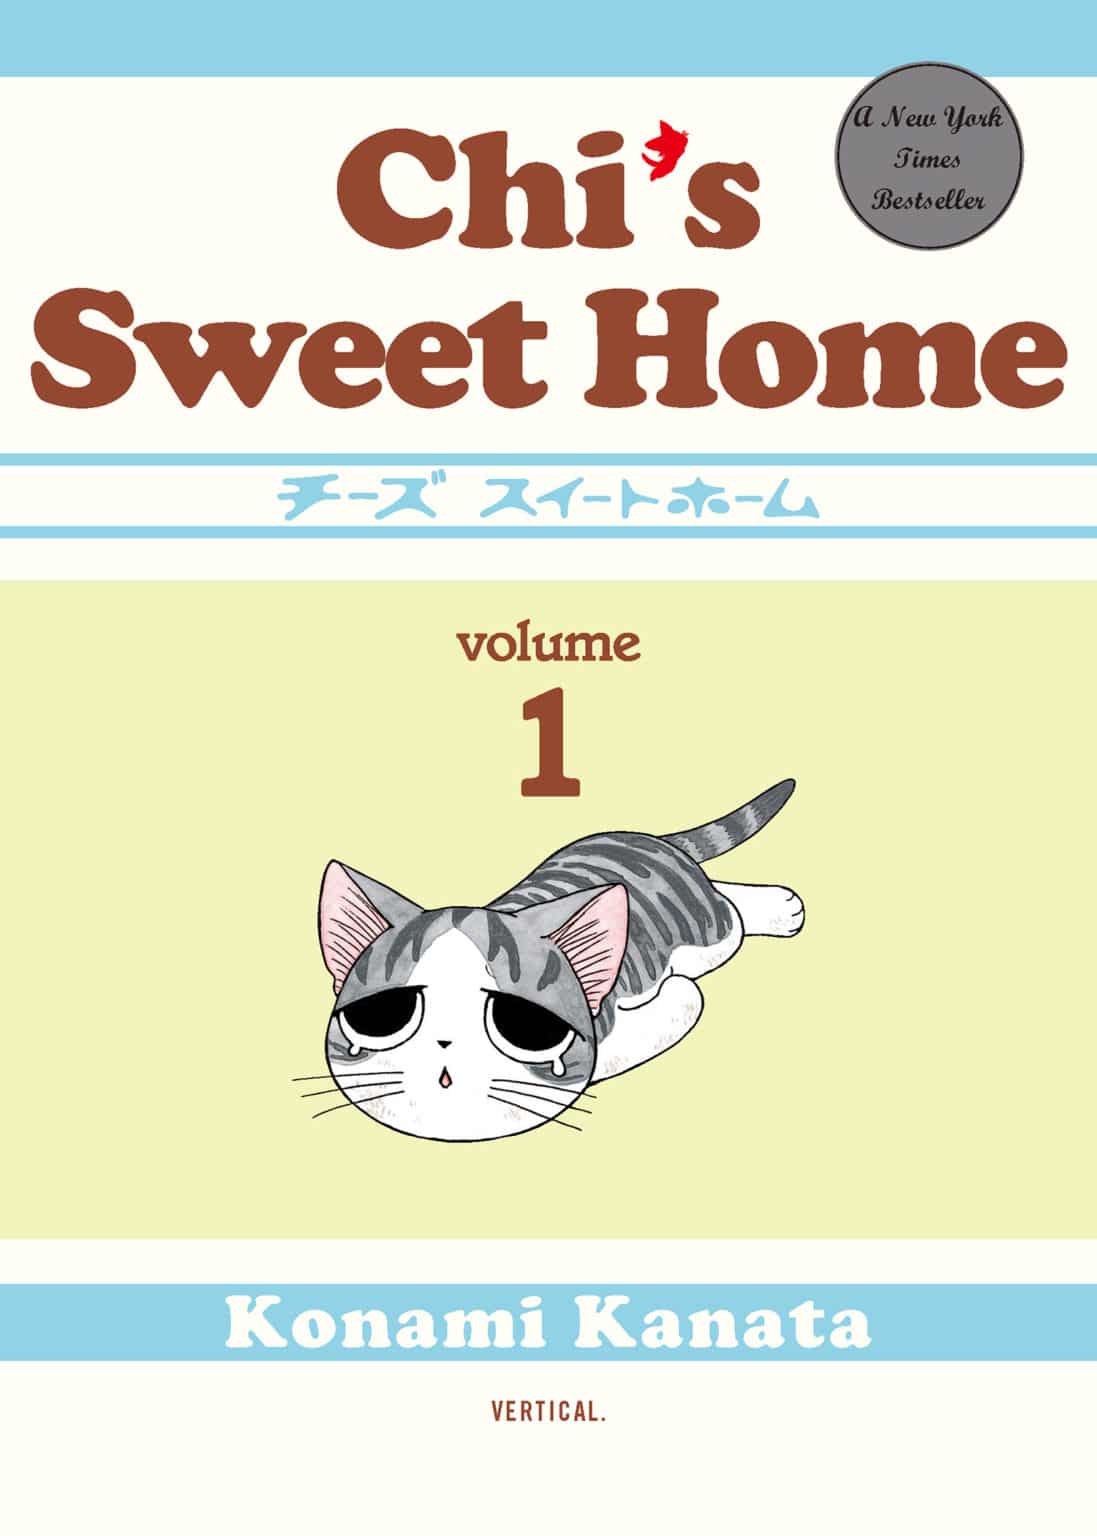 Chi's Sweet Home vol 1 by Konami Kanata